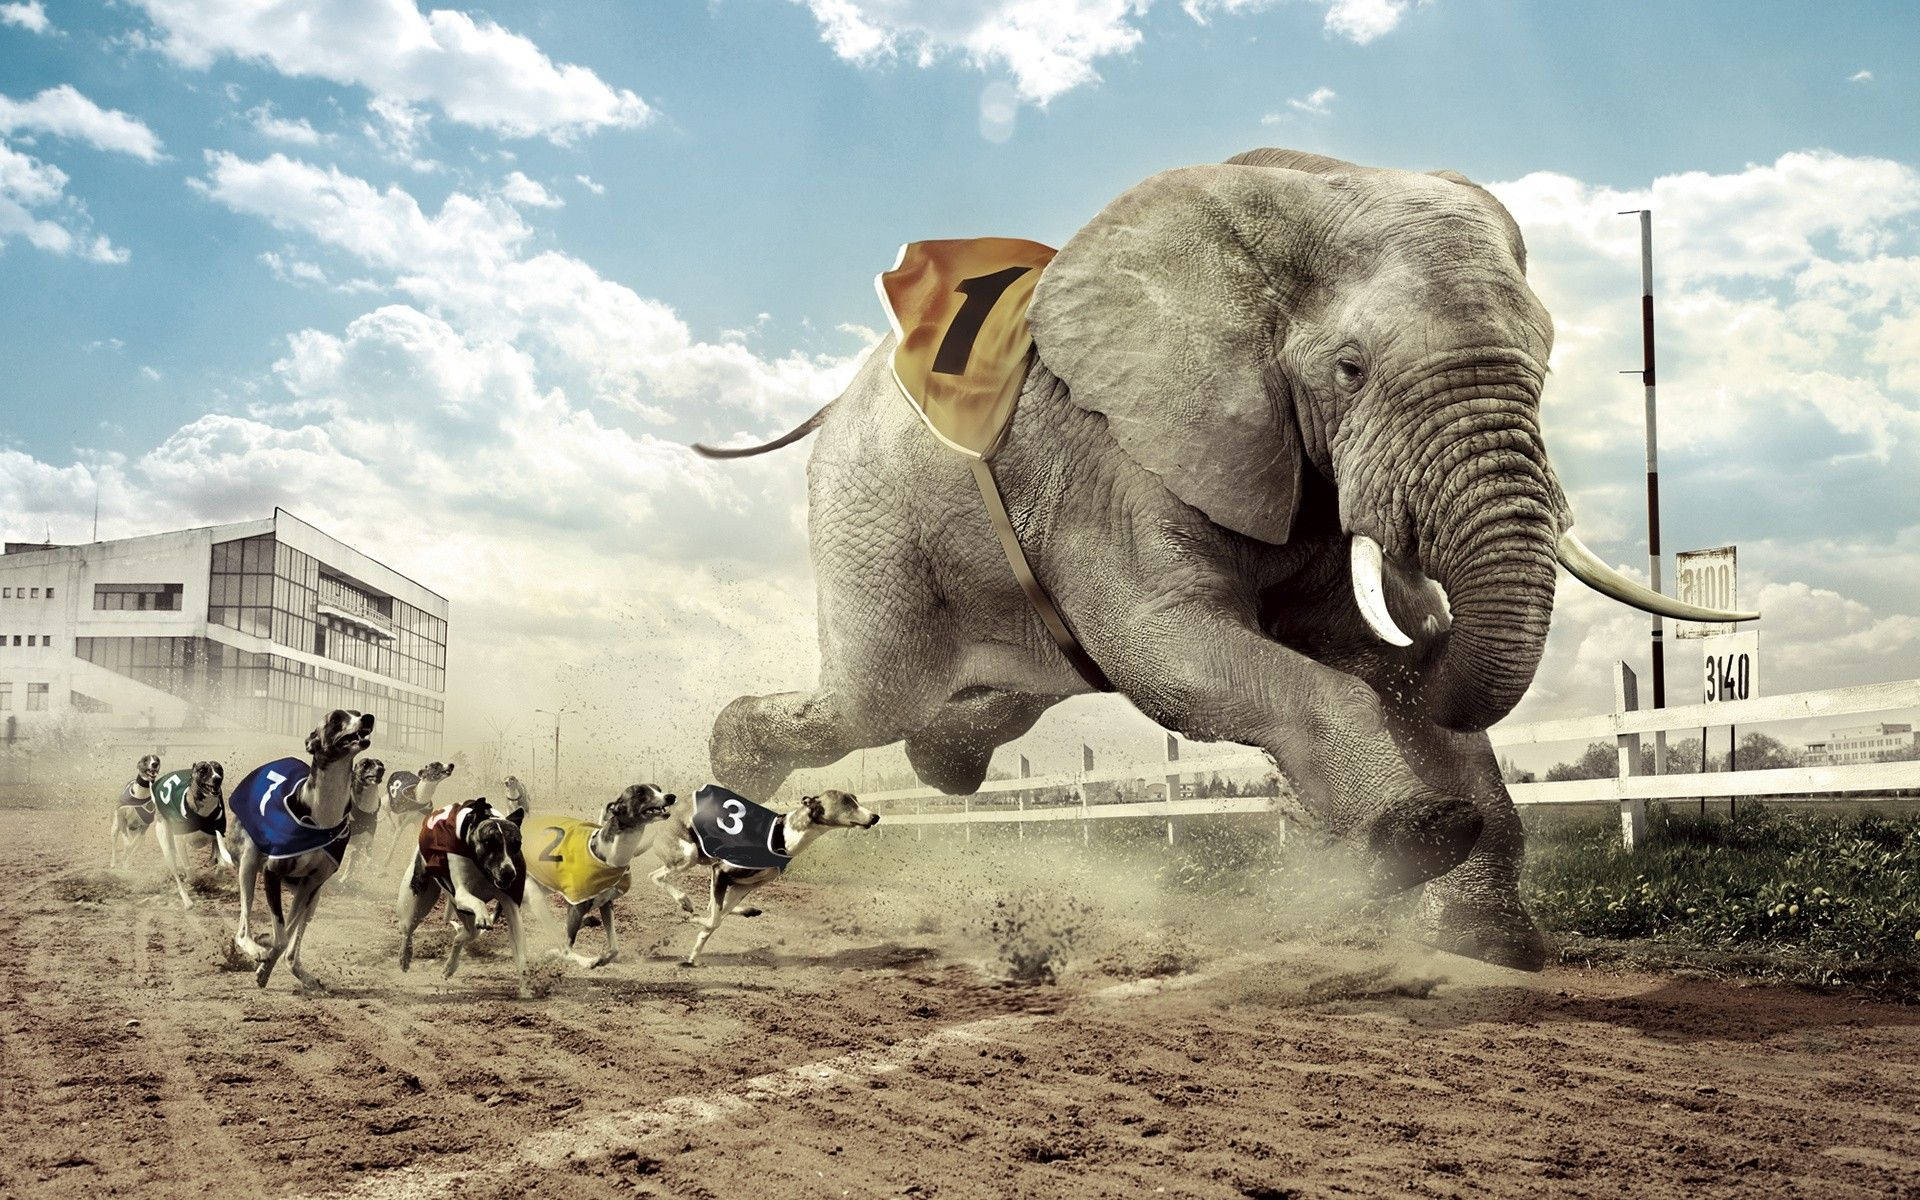 Elephant Desktop Wallpapers